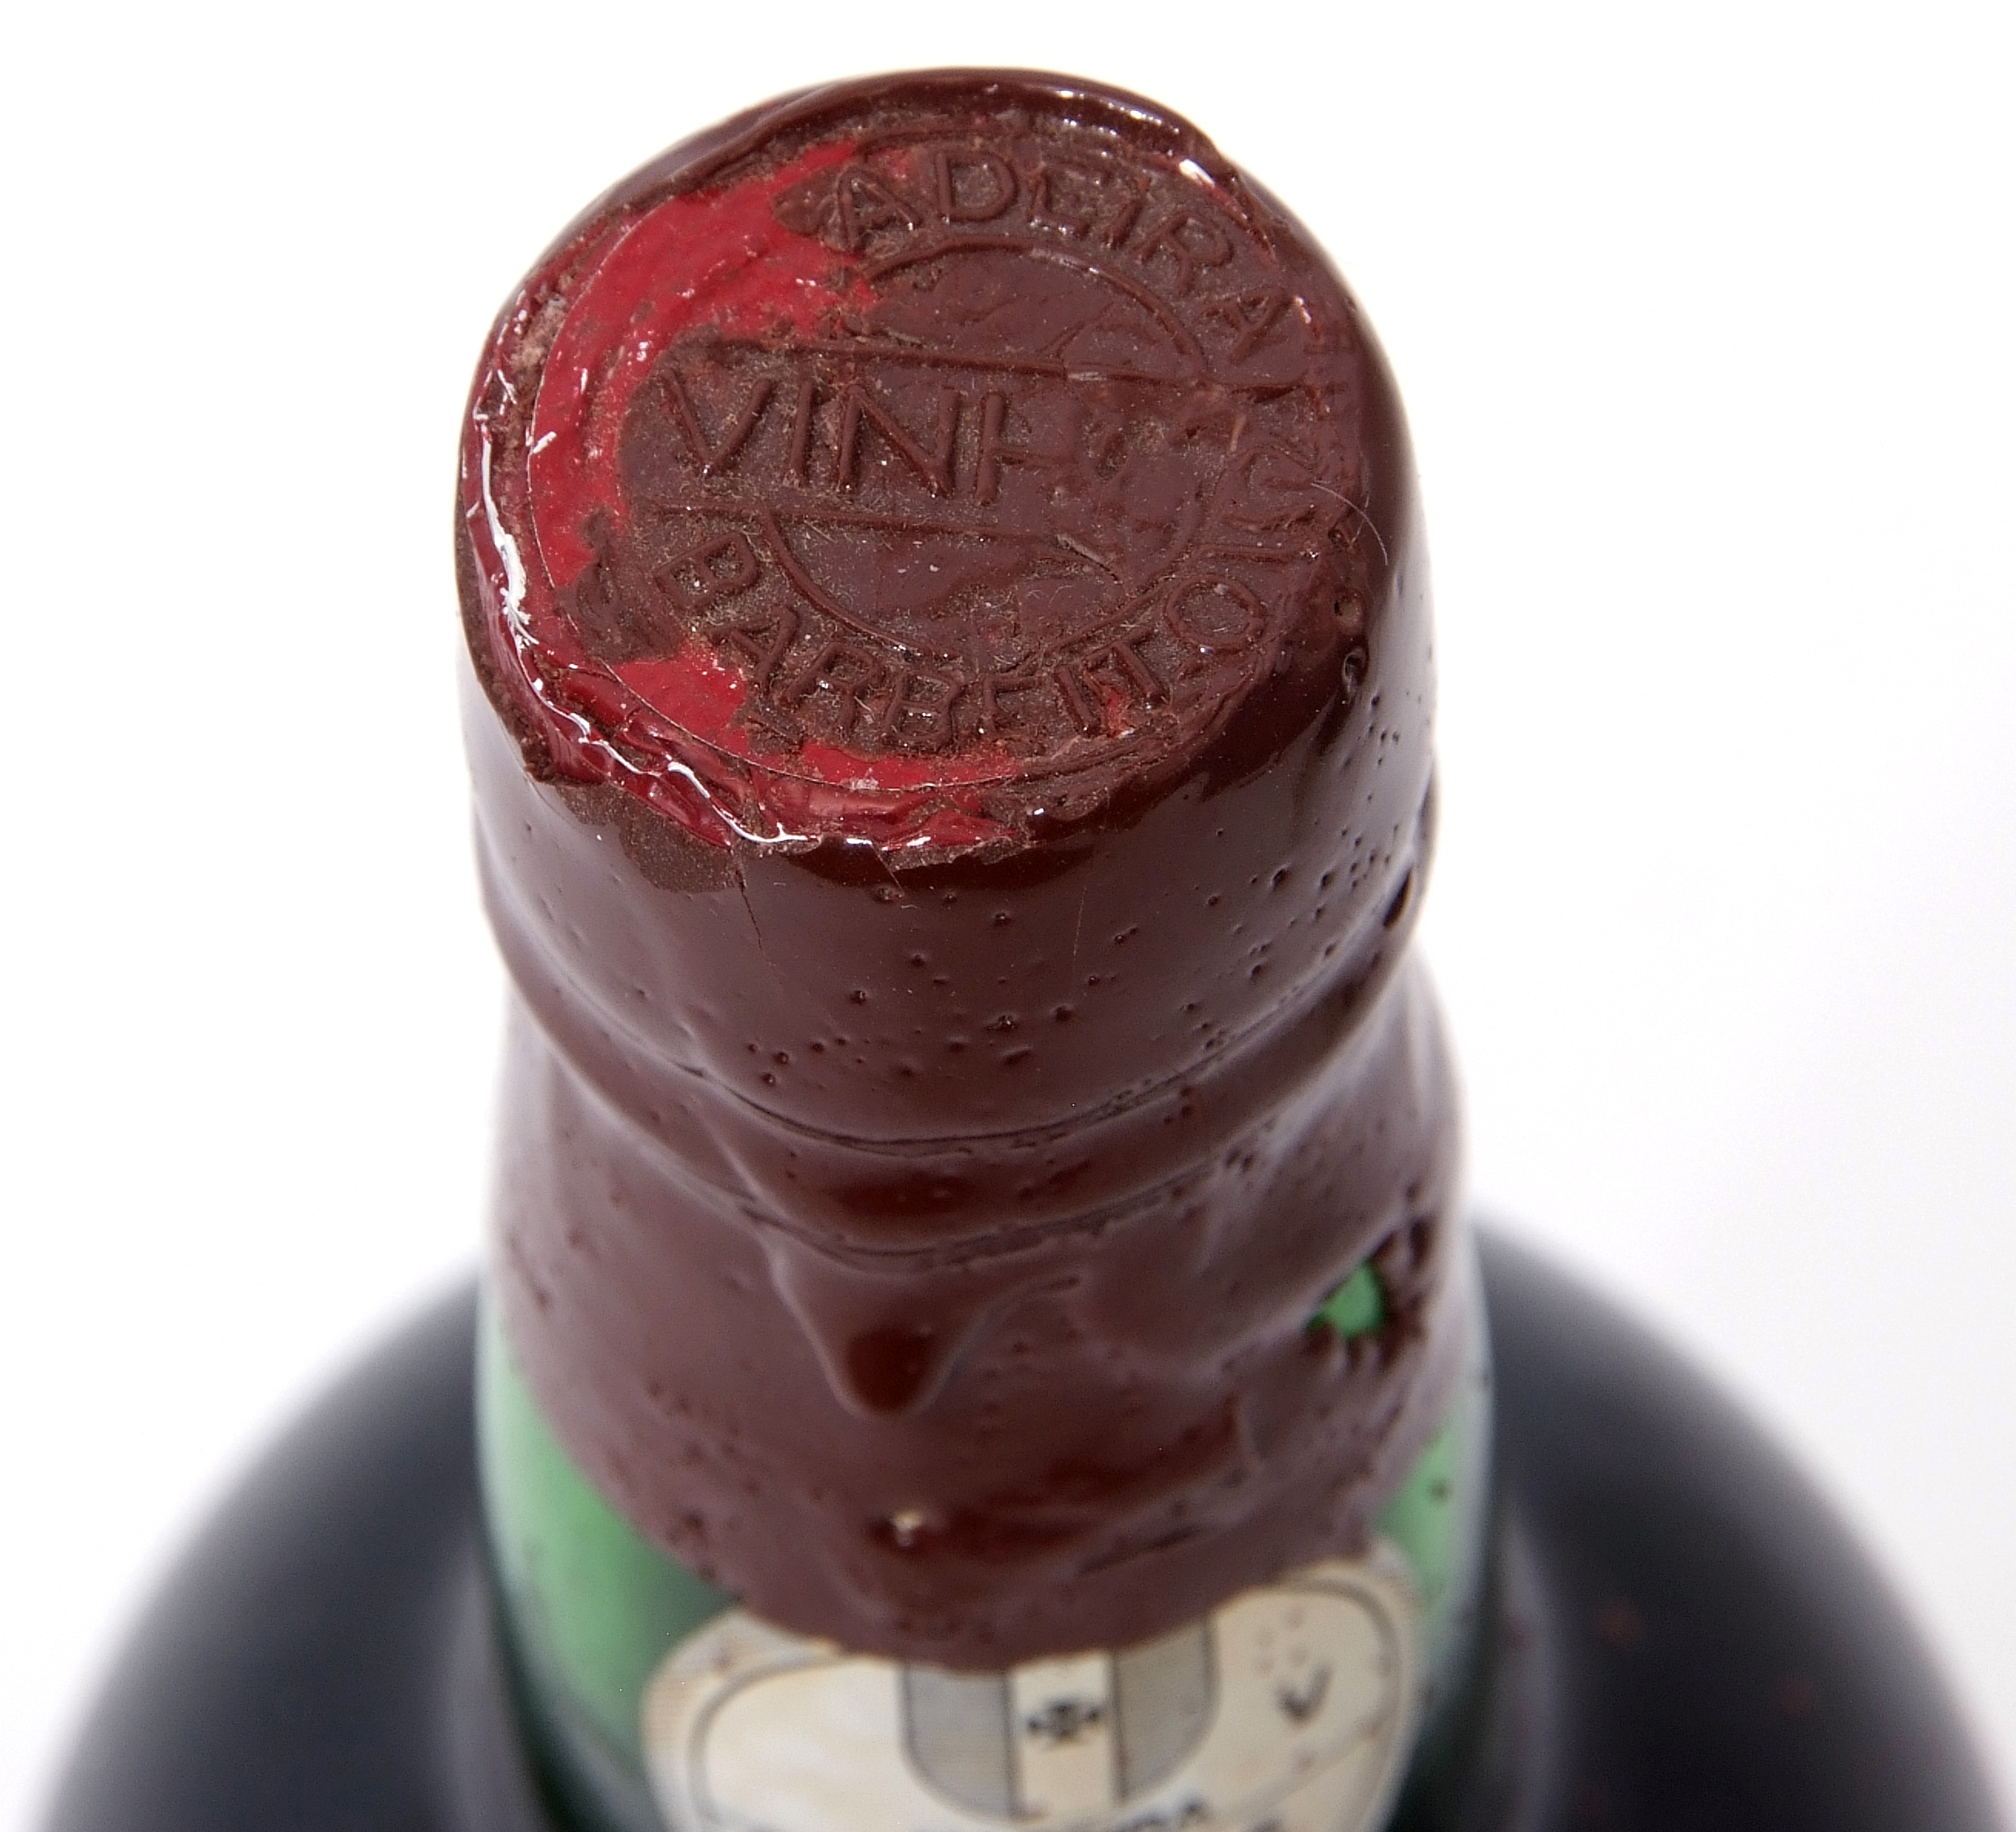 Barbeito Madeira Sercial vintage 1910 1 bottle - Image 2 of 2